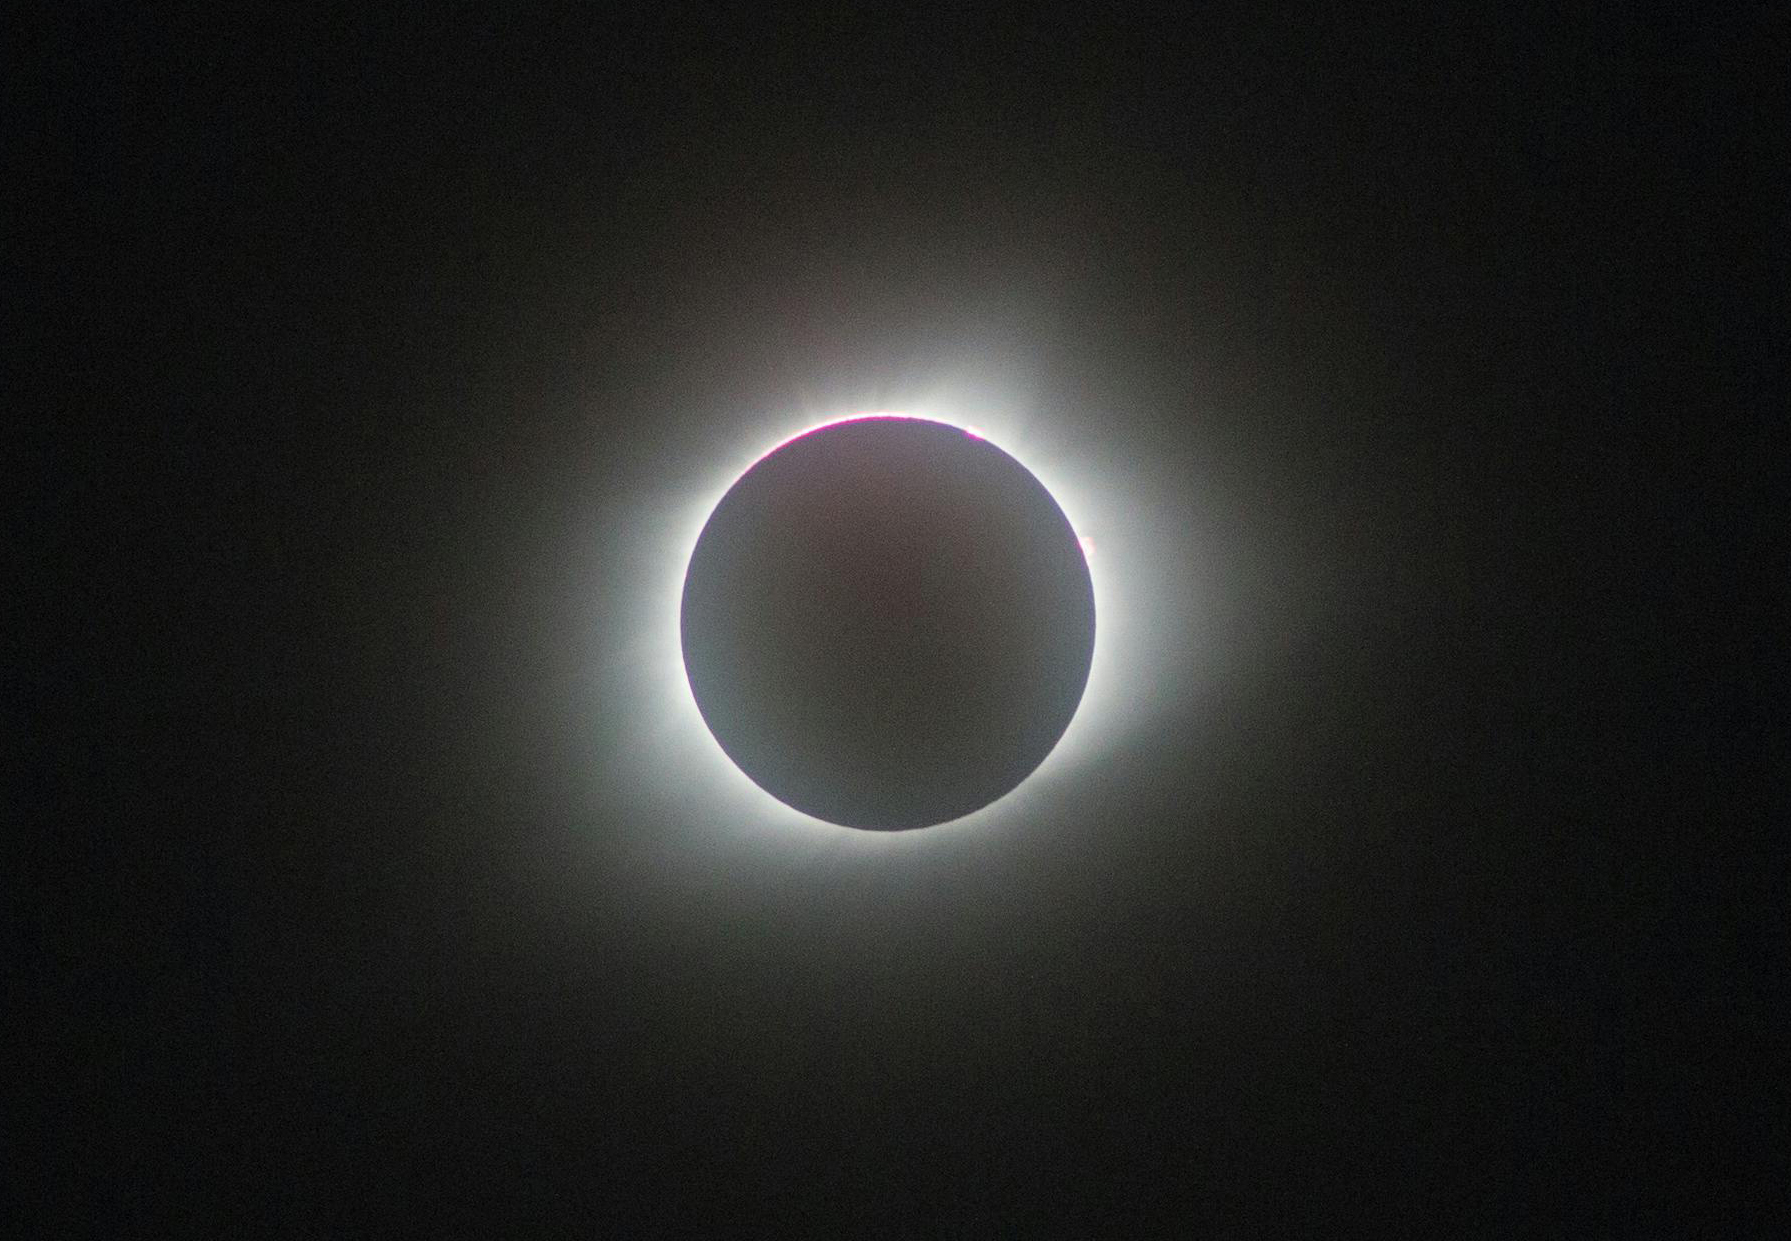 Watch NASA's livestream of today’s solar eclipse